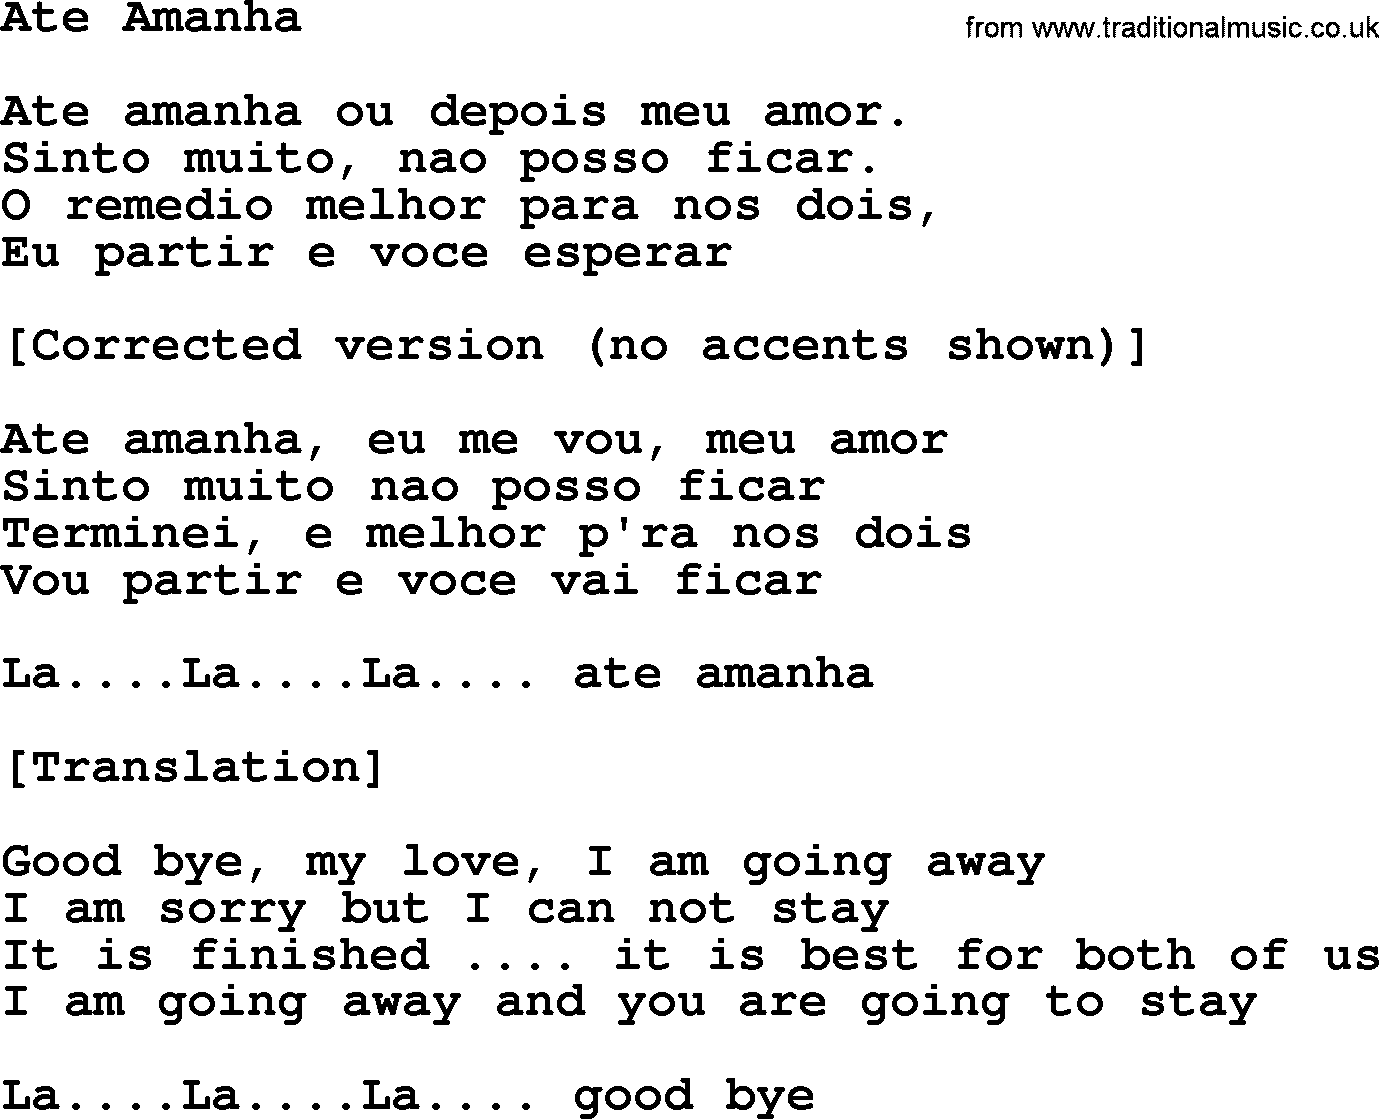 Joan Baez song Ate Amanha, lyrics